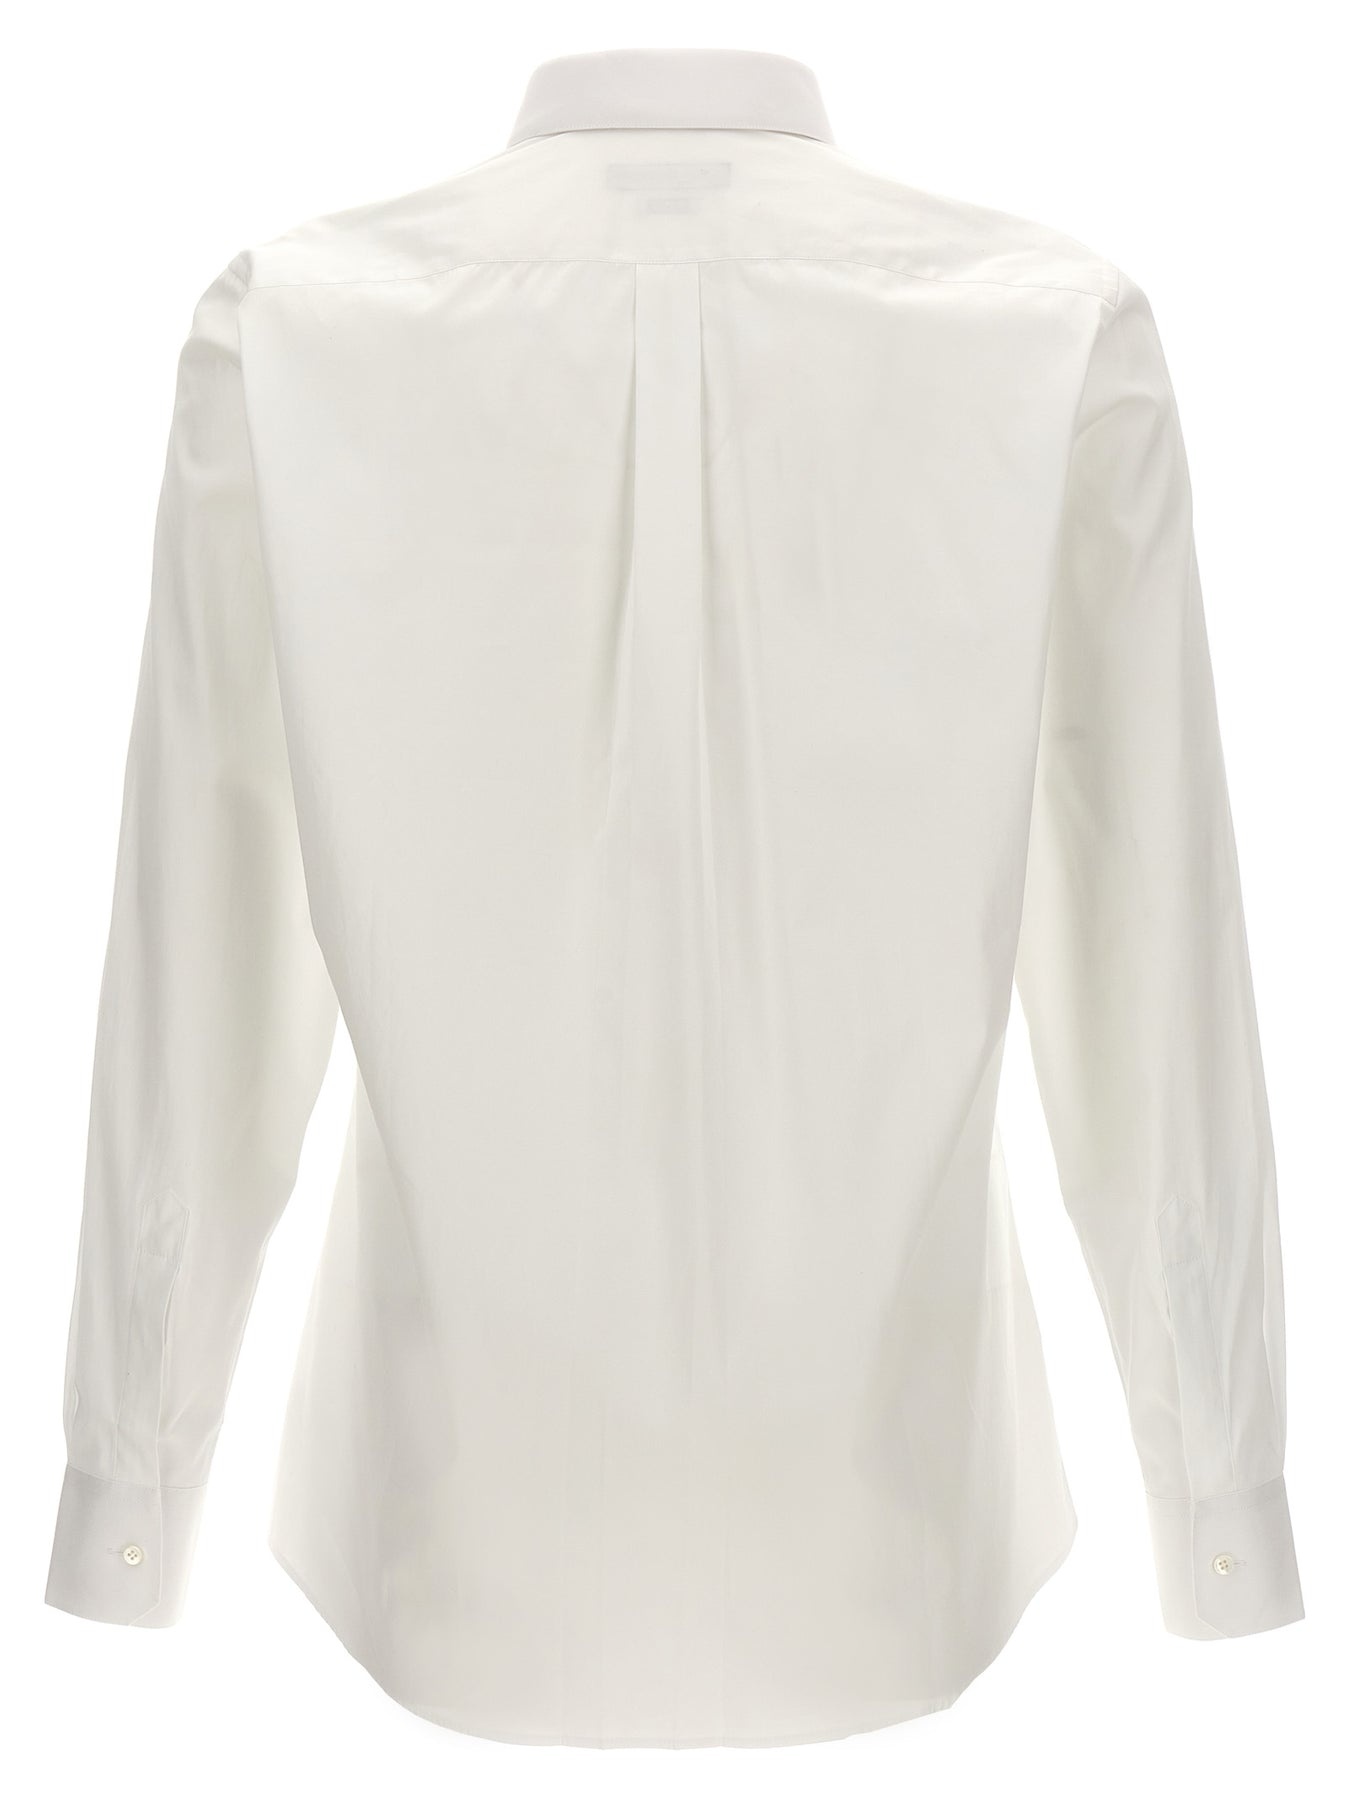 Logo Embroidery Shirt Shirt, Blouse White - 2